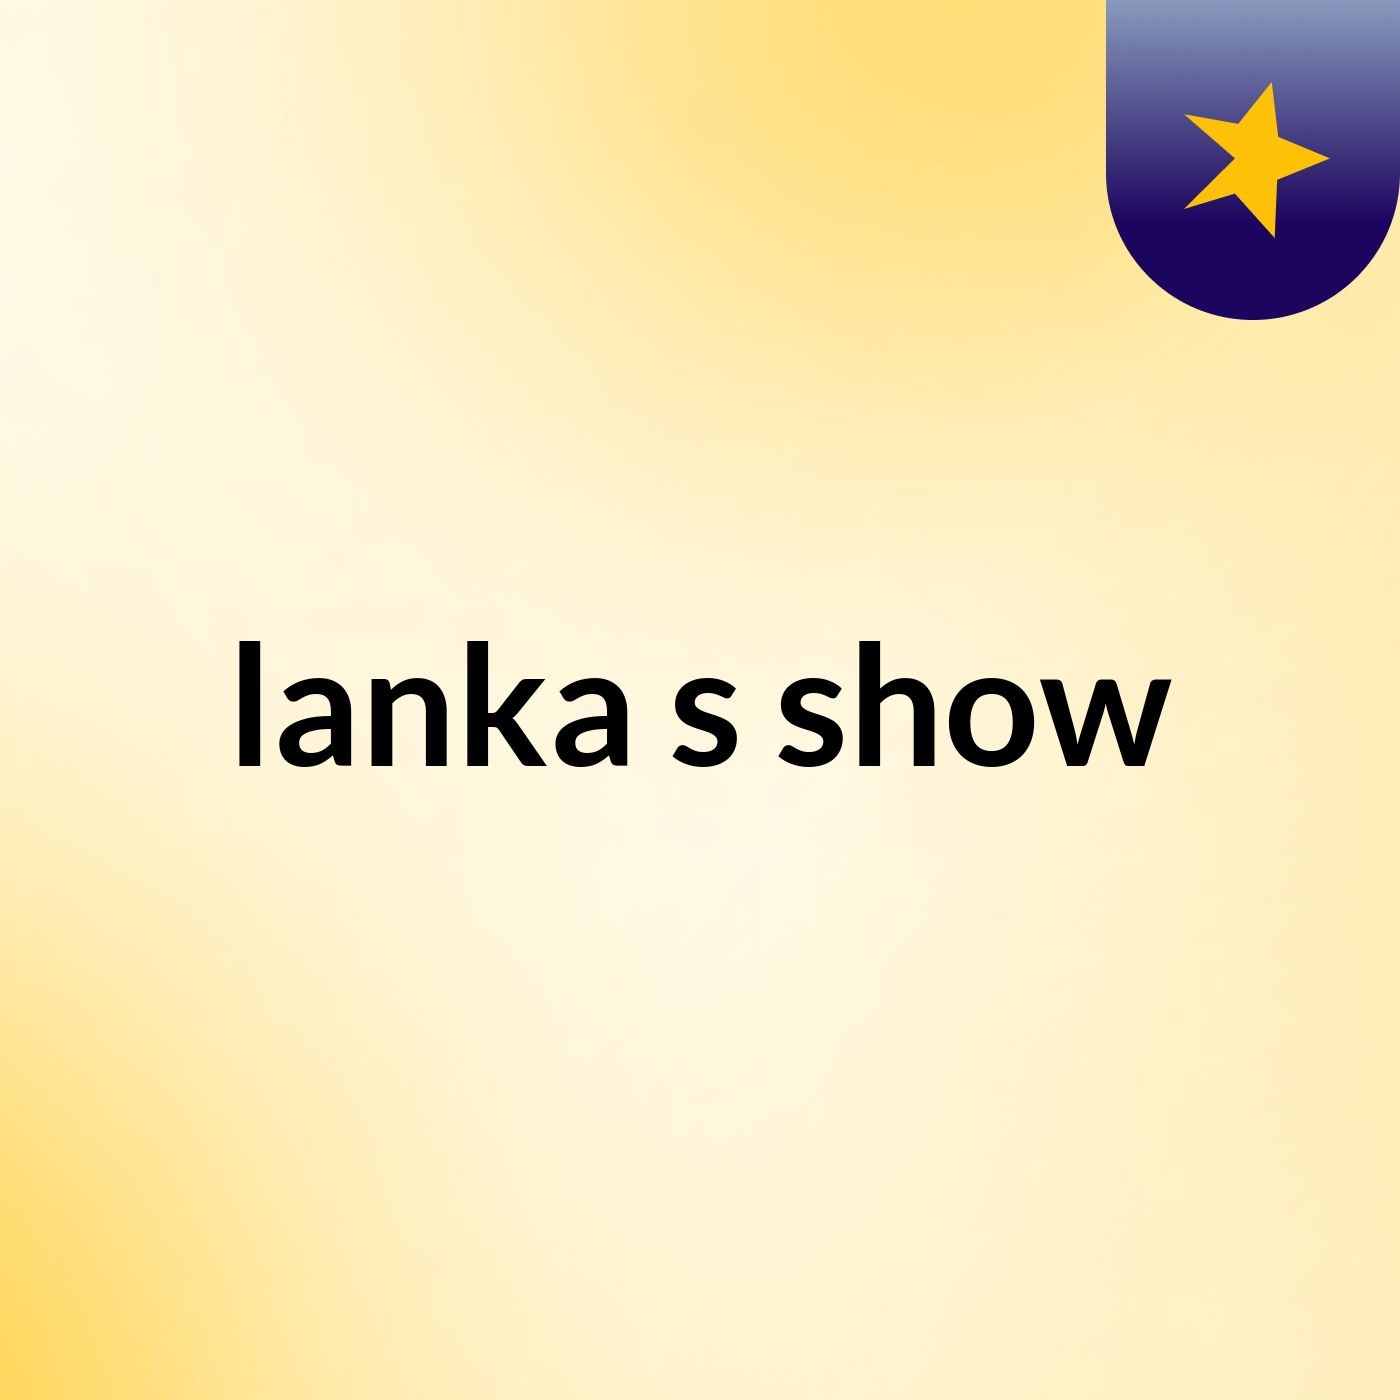 lanka's show